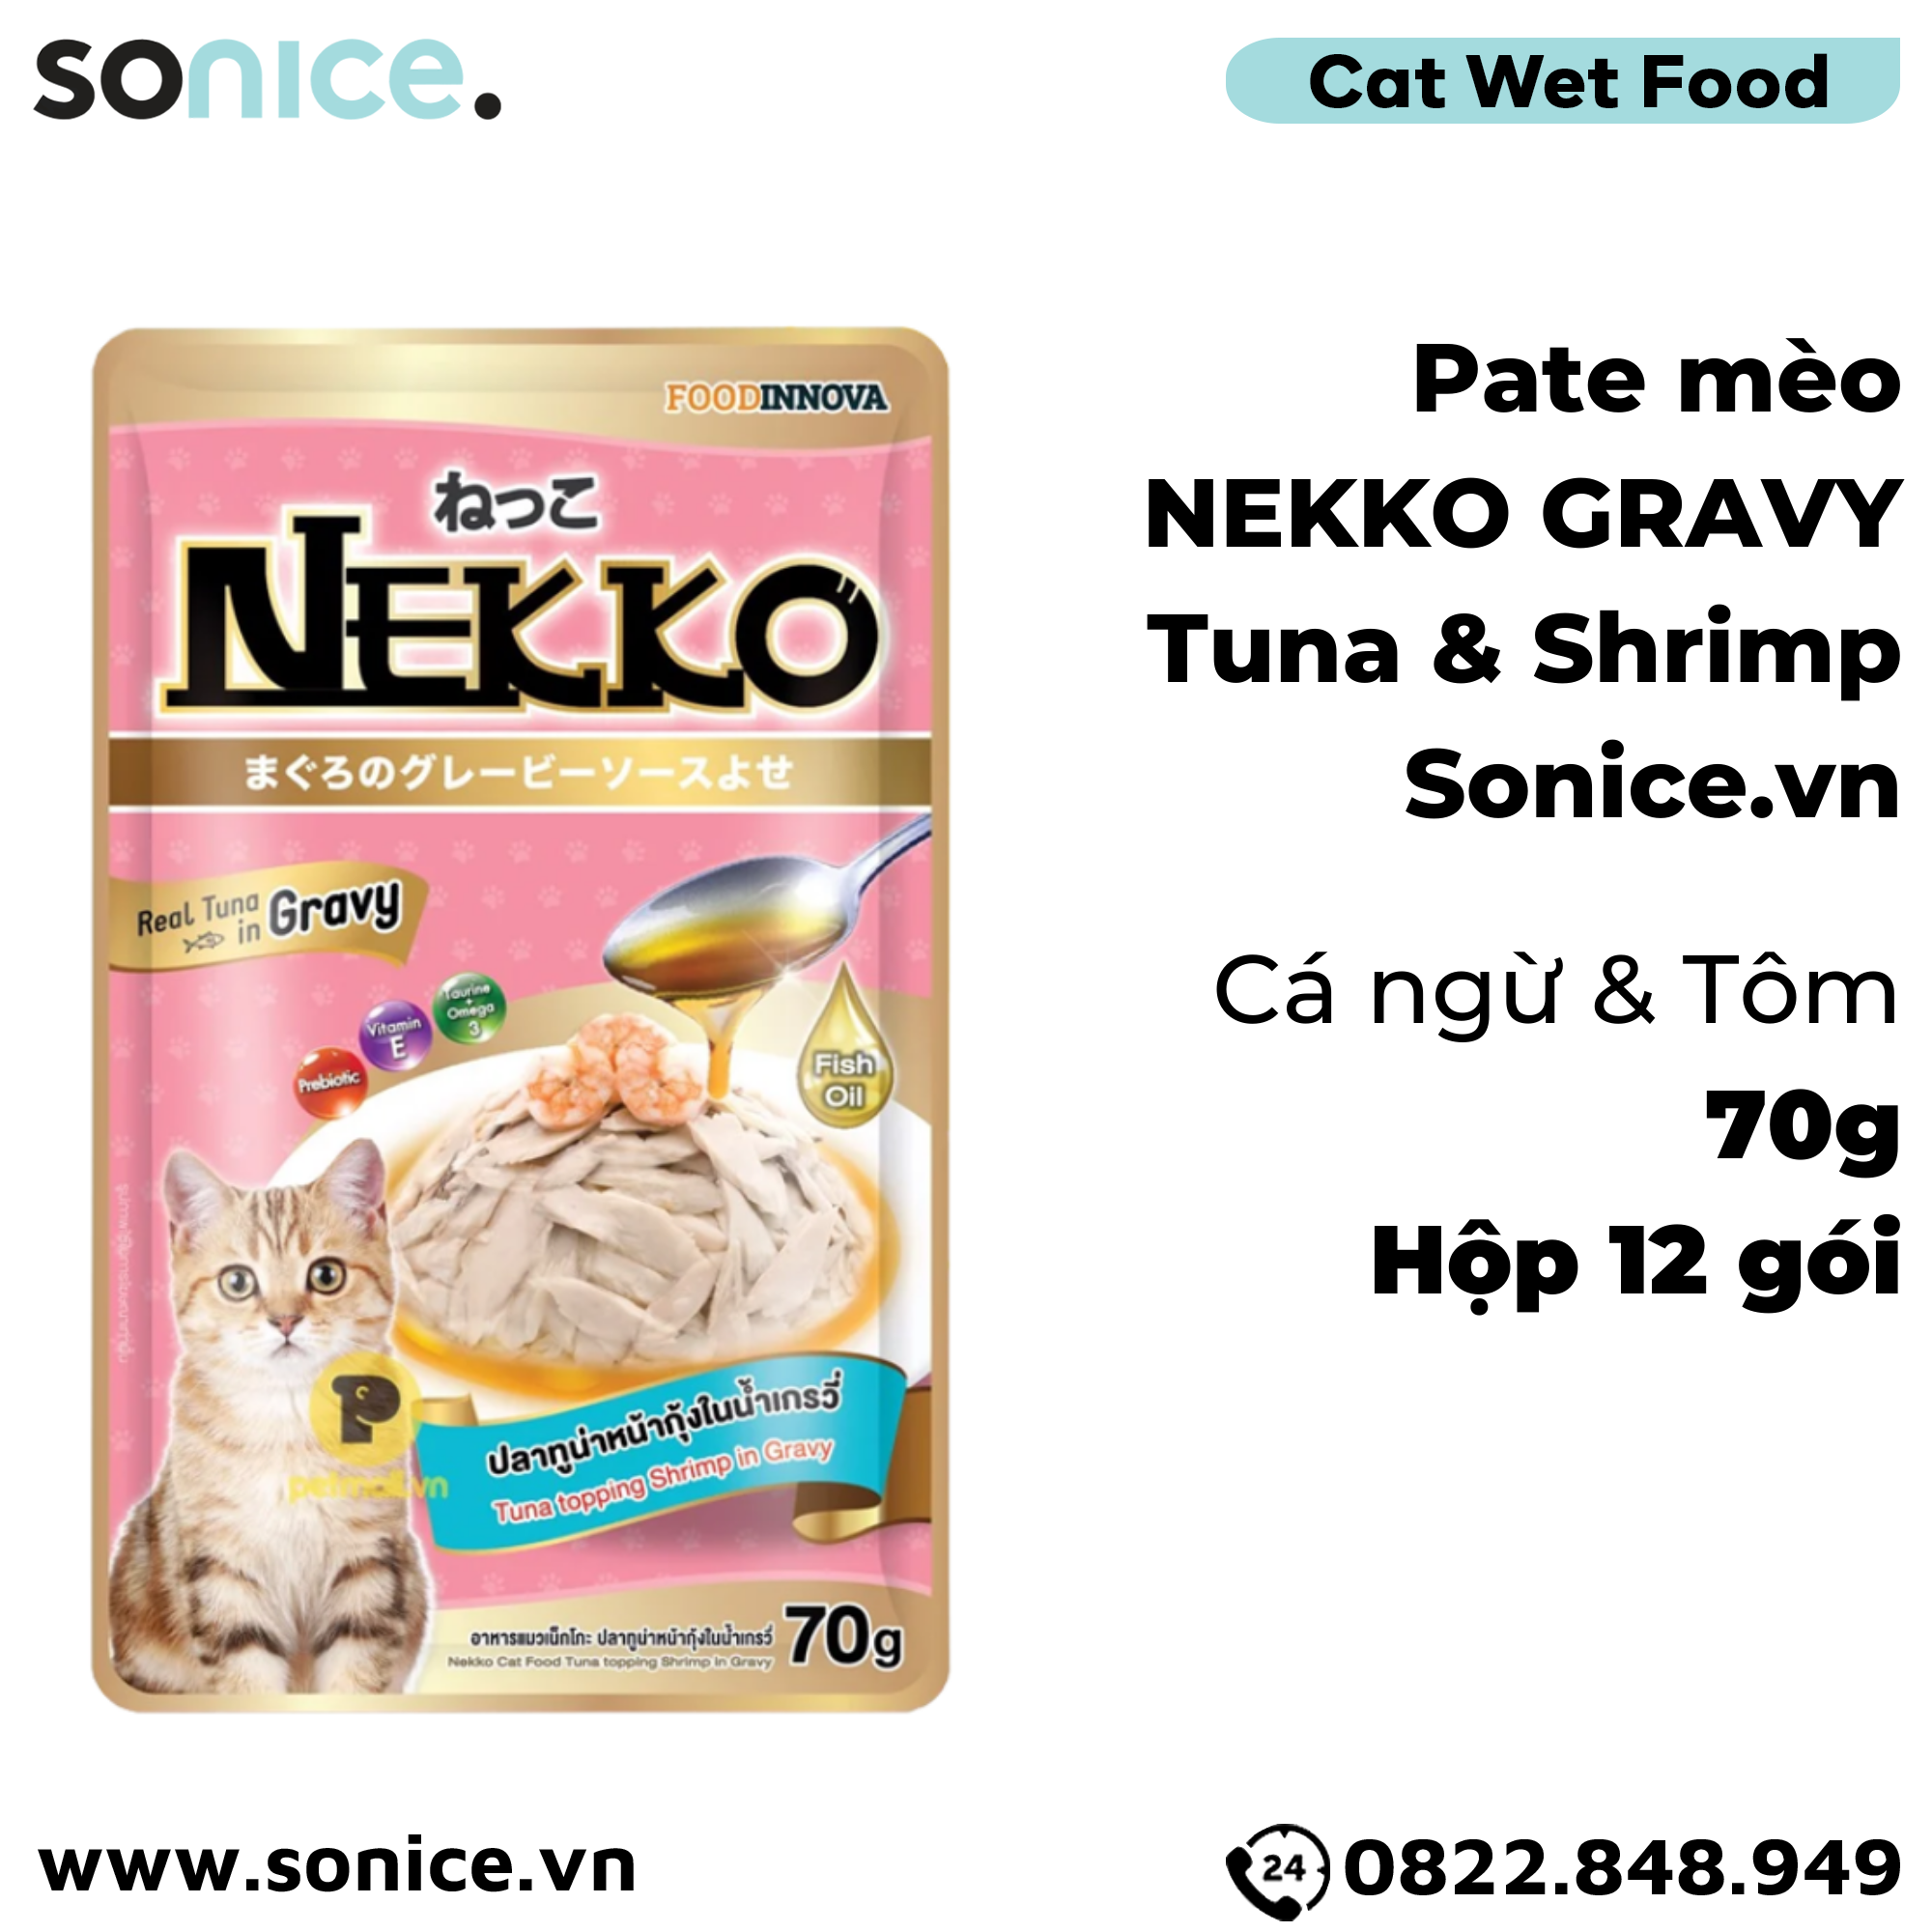  Pate mèo NEKKO GRAVY Cá Ngừ & Shrimp 70g - 1 hộp 12 gói SONICE. 